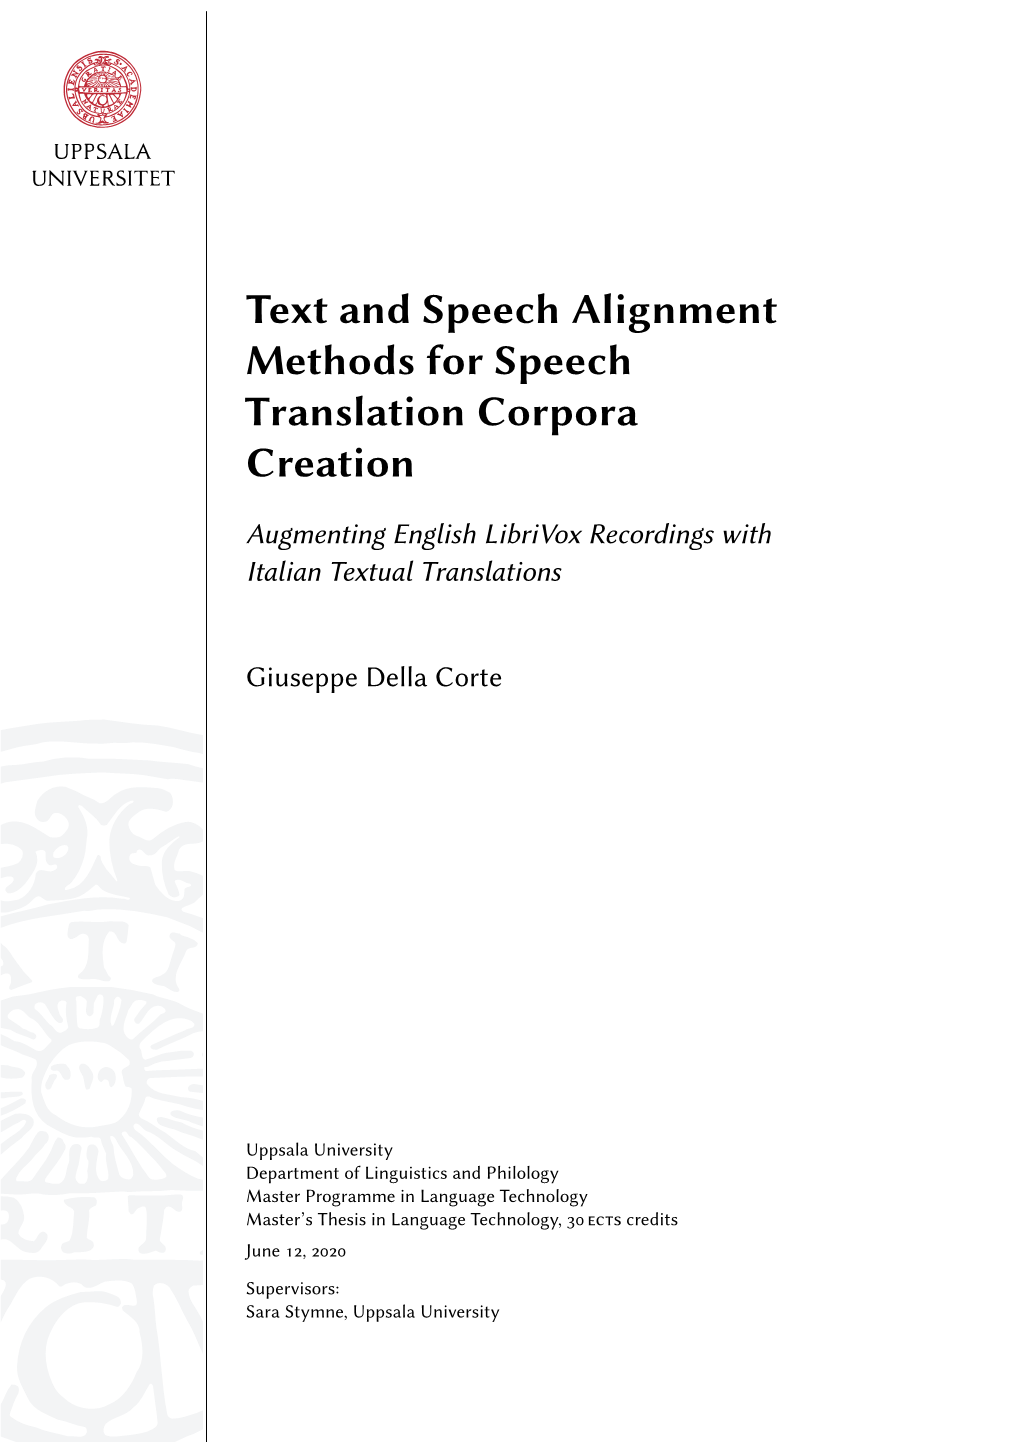 Text and Speech Alignment Methods for Speech Translation Corpora Creation